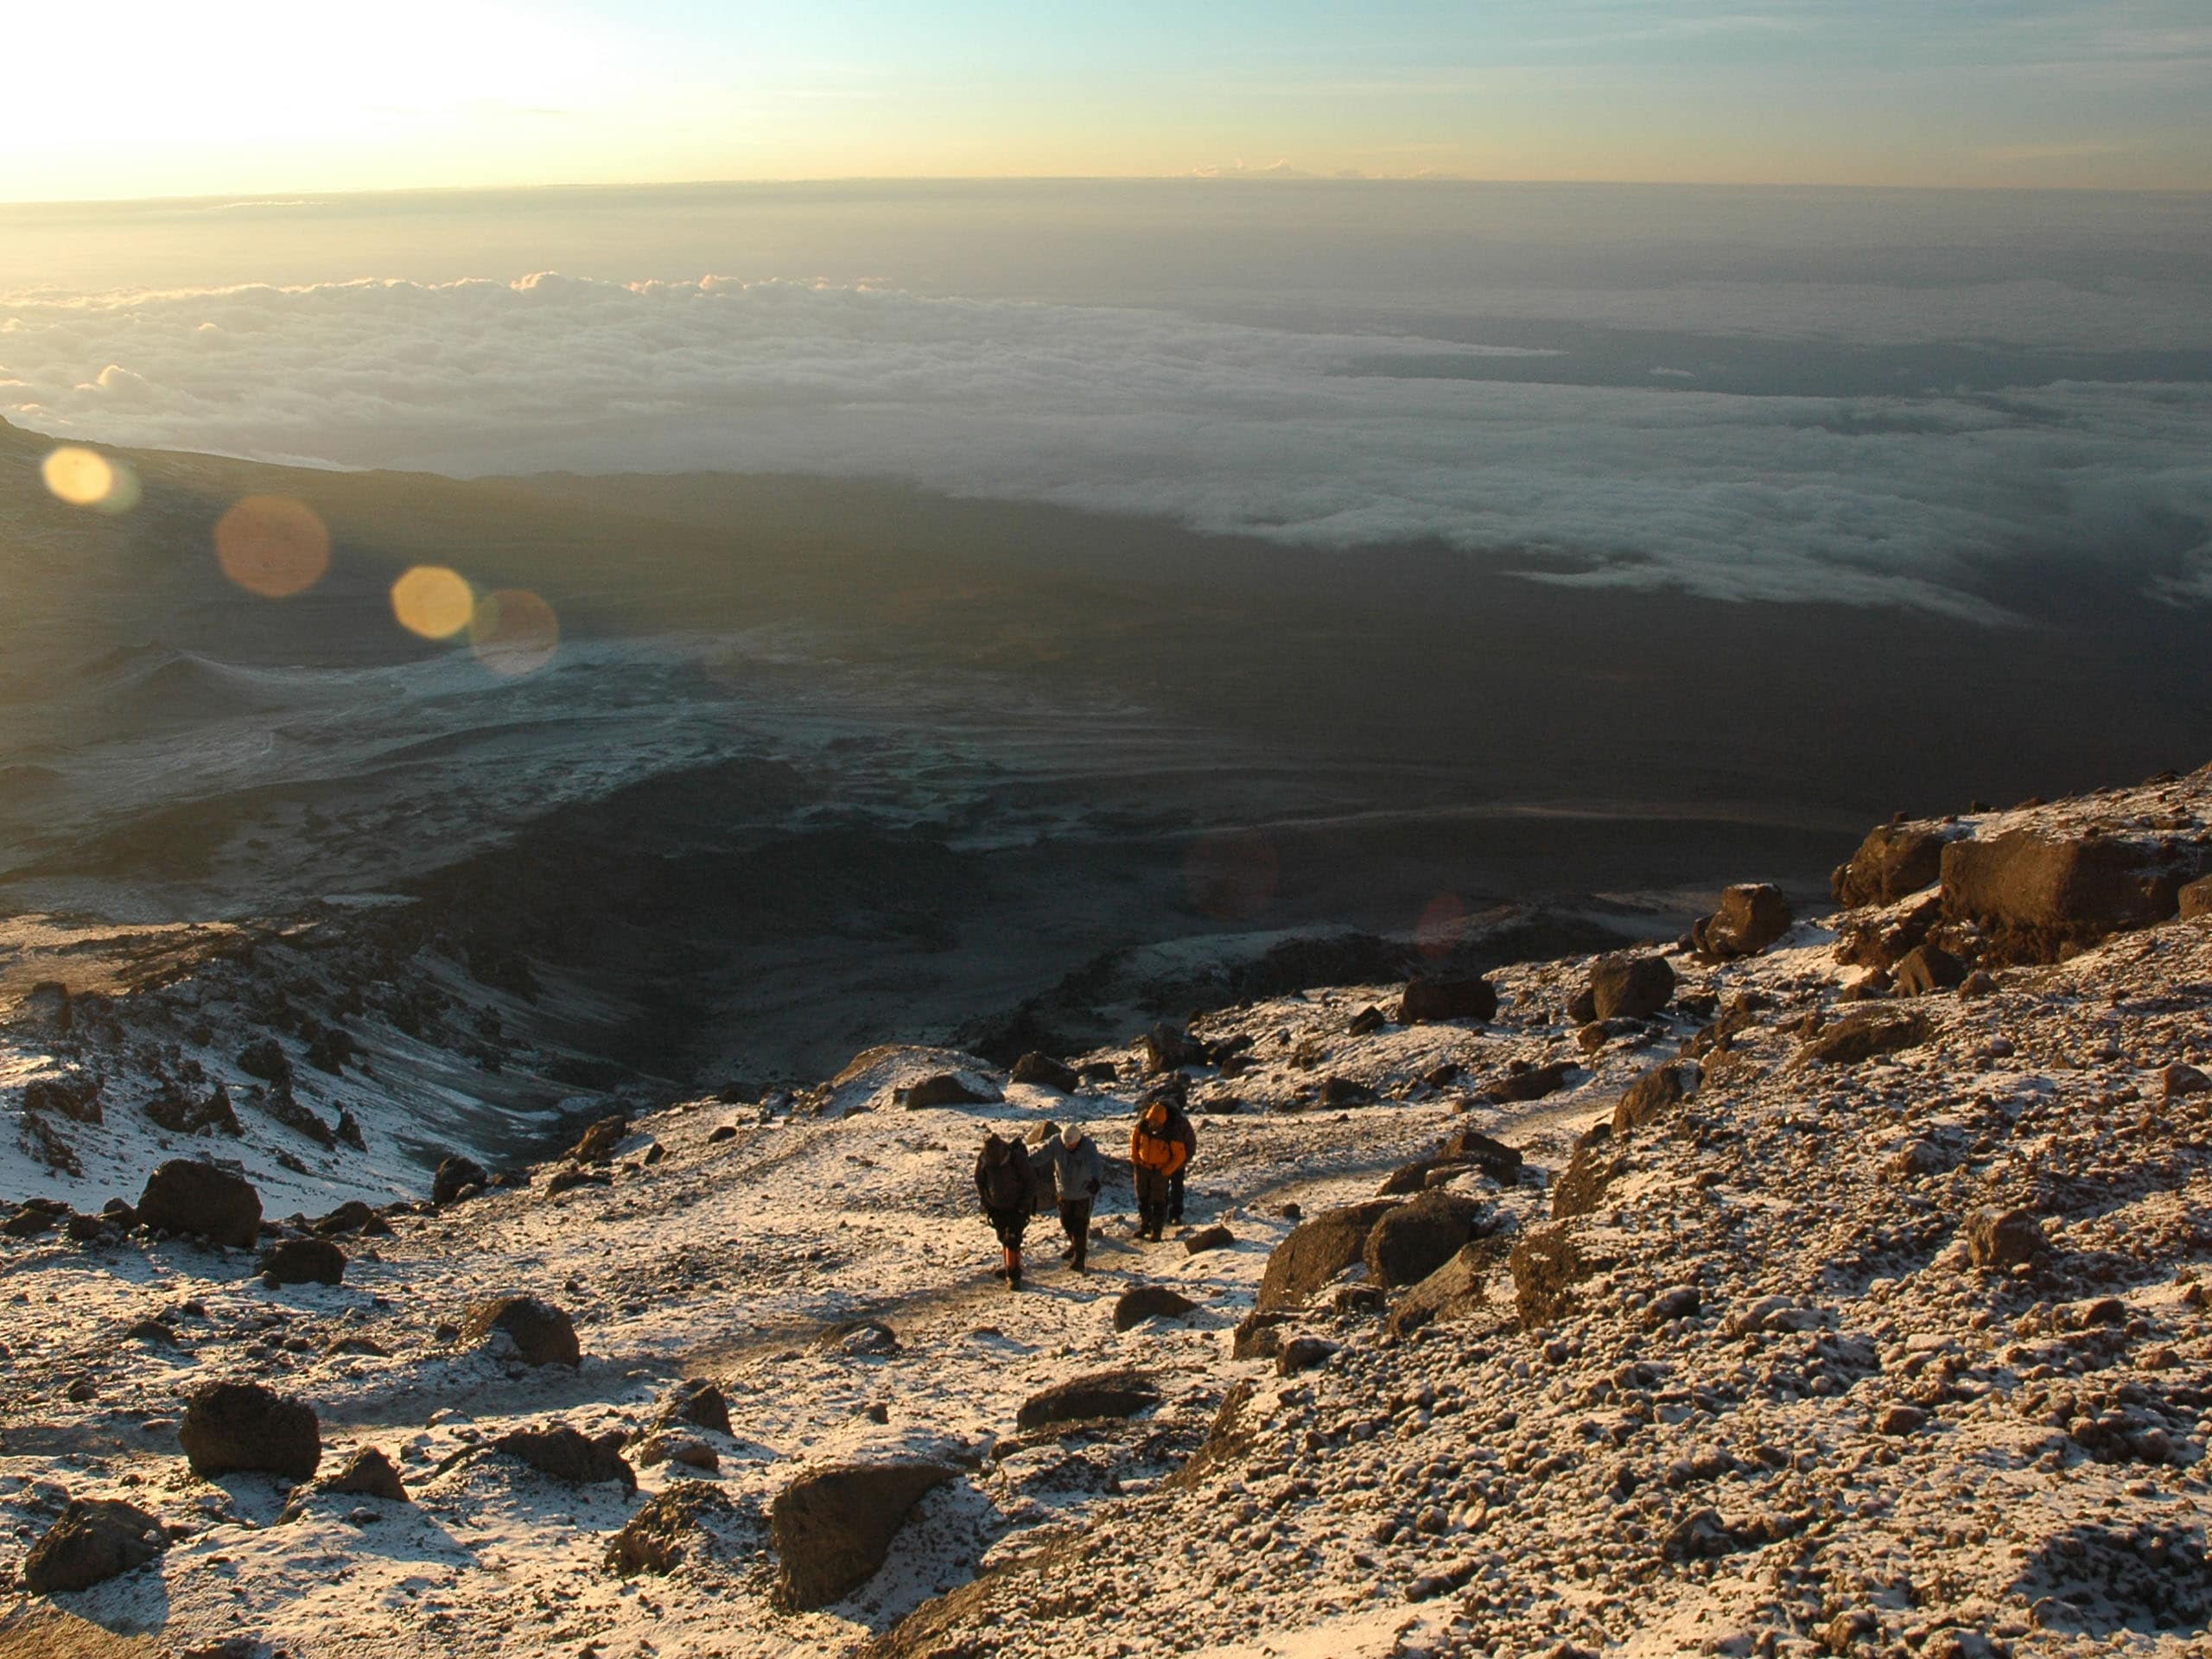 Climbing Kilimanjaro - Final Ascent to the Summit